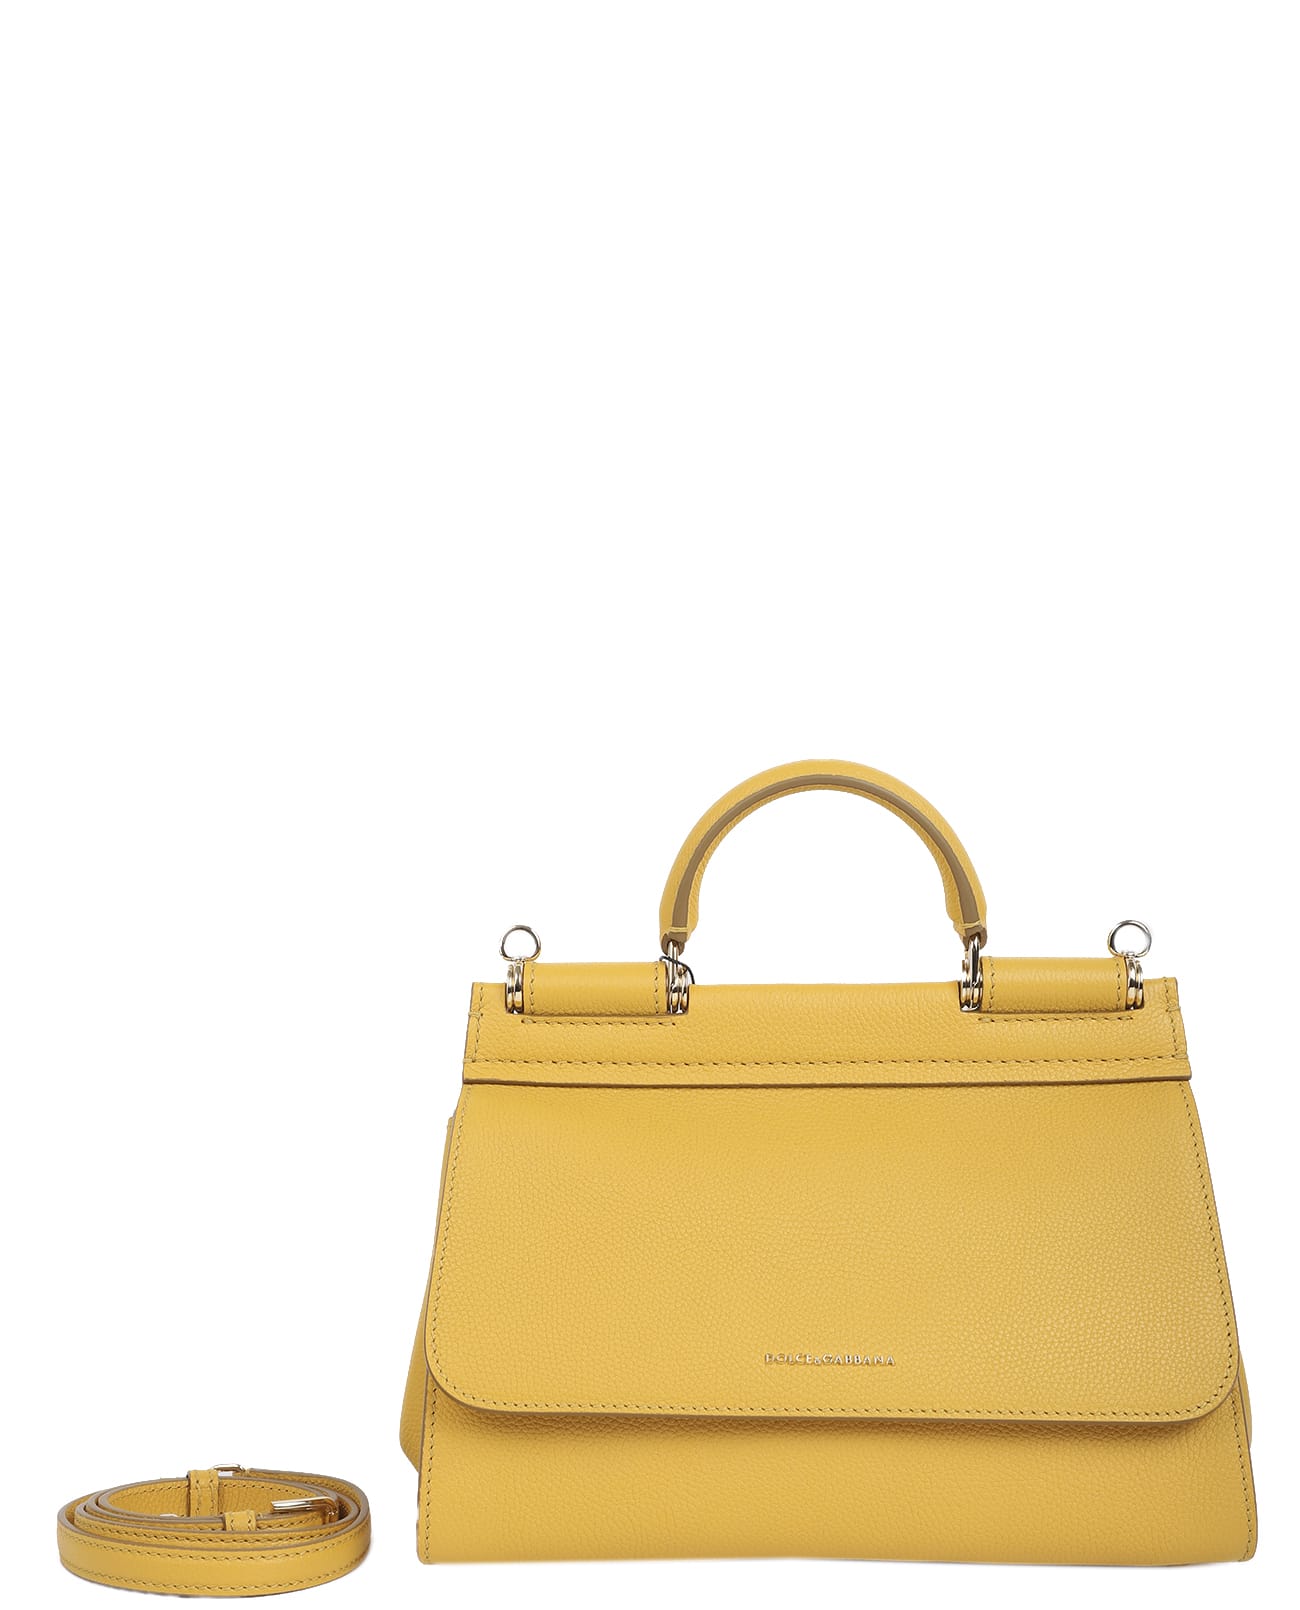 Dolce & Gabbana Marigold Soft Sicily Bag S In Yellow